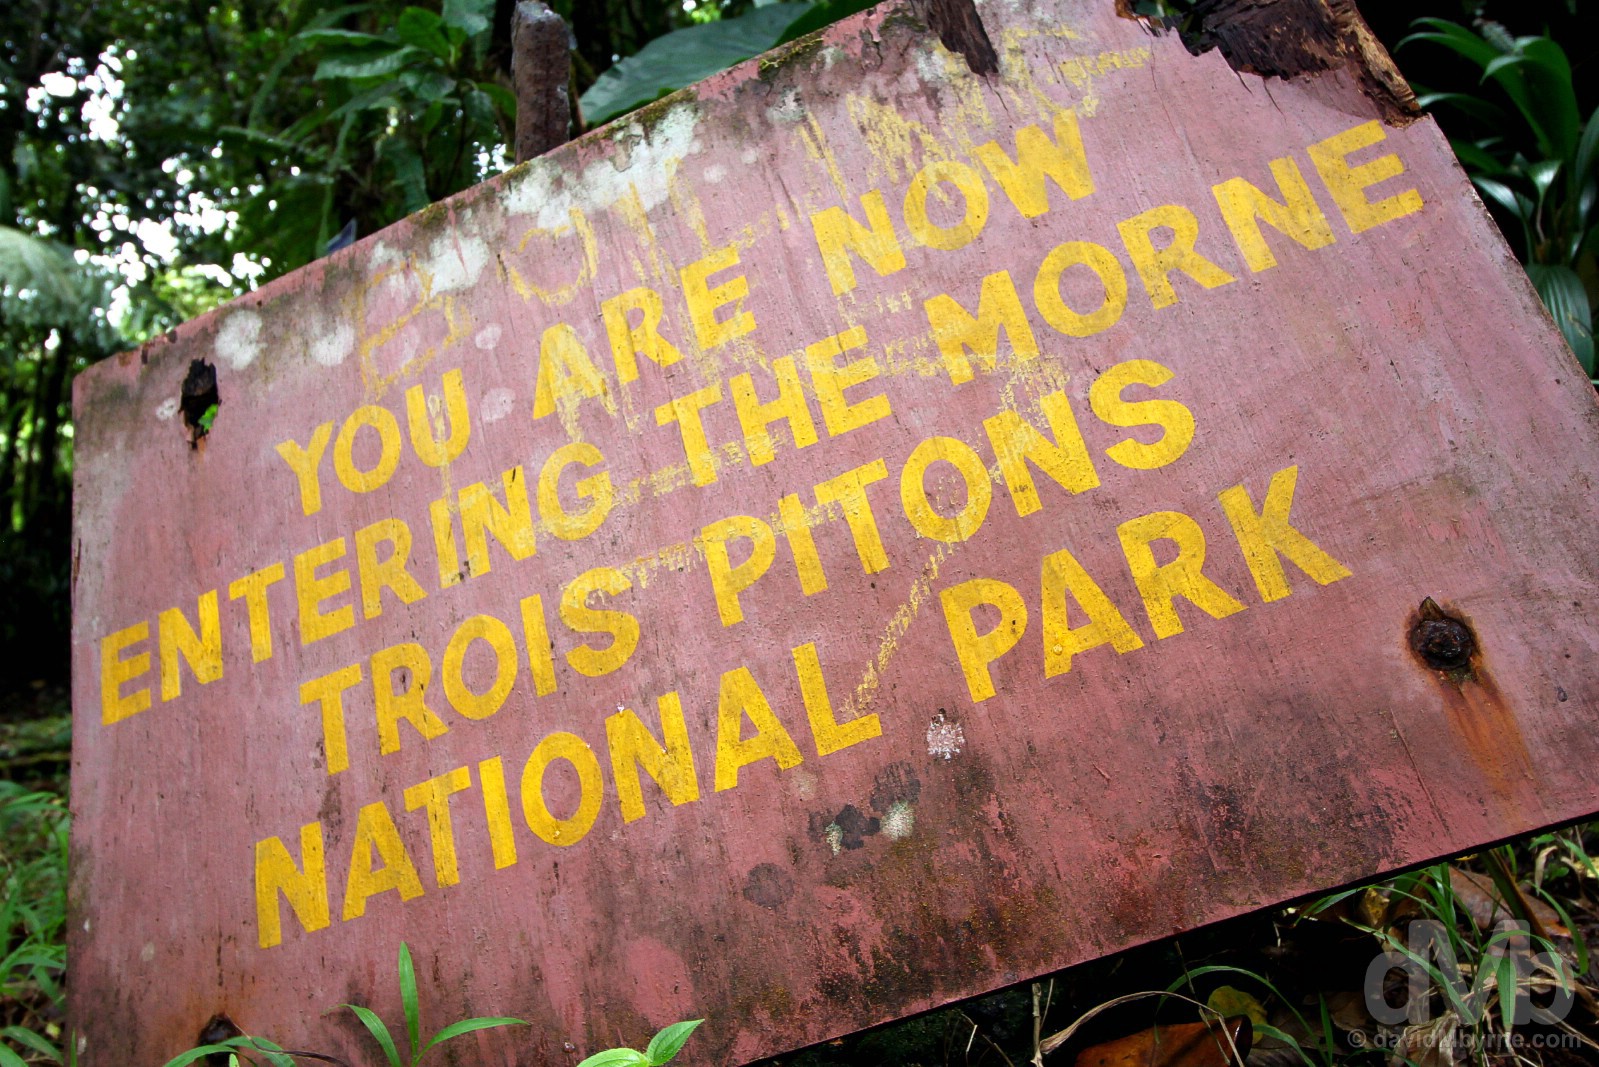 Morne Trois Pitons National Park, Dominica, Lesser Antilles. June 11, 2015.